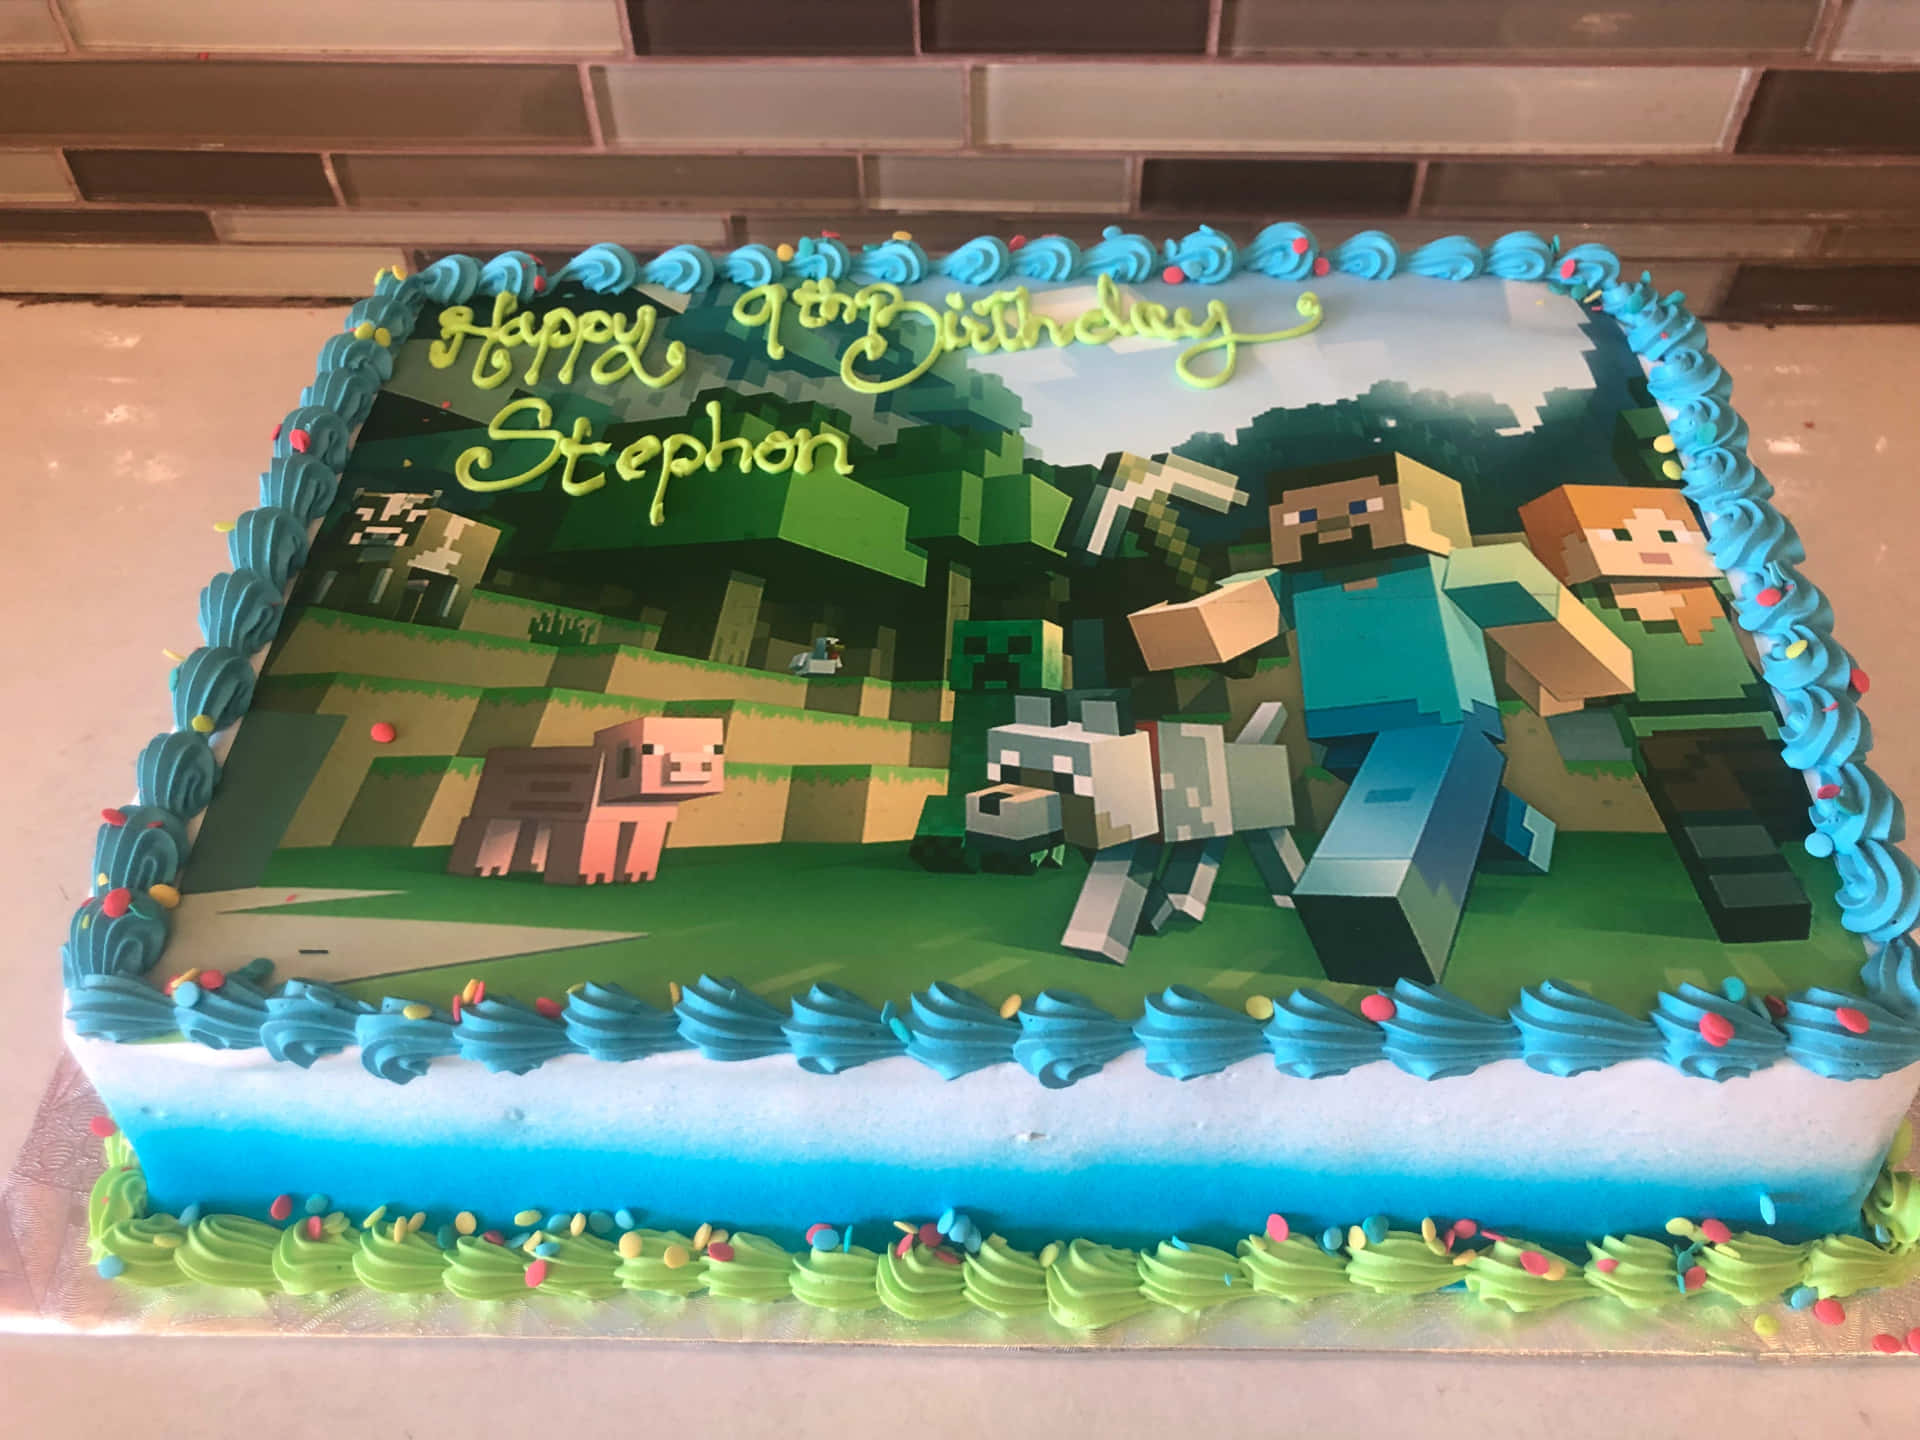 Minecraft Cake Decorating Photos